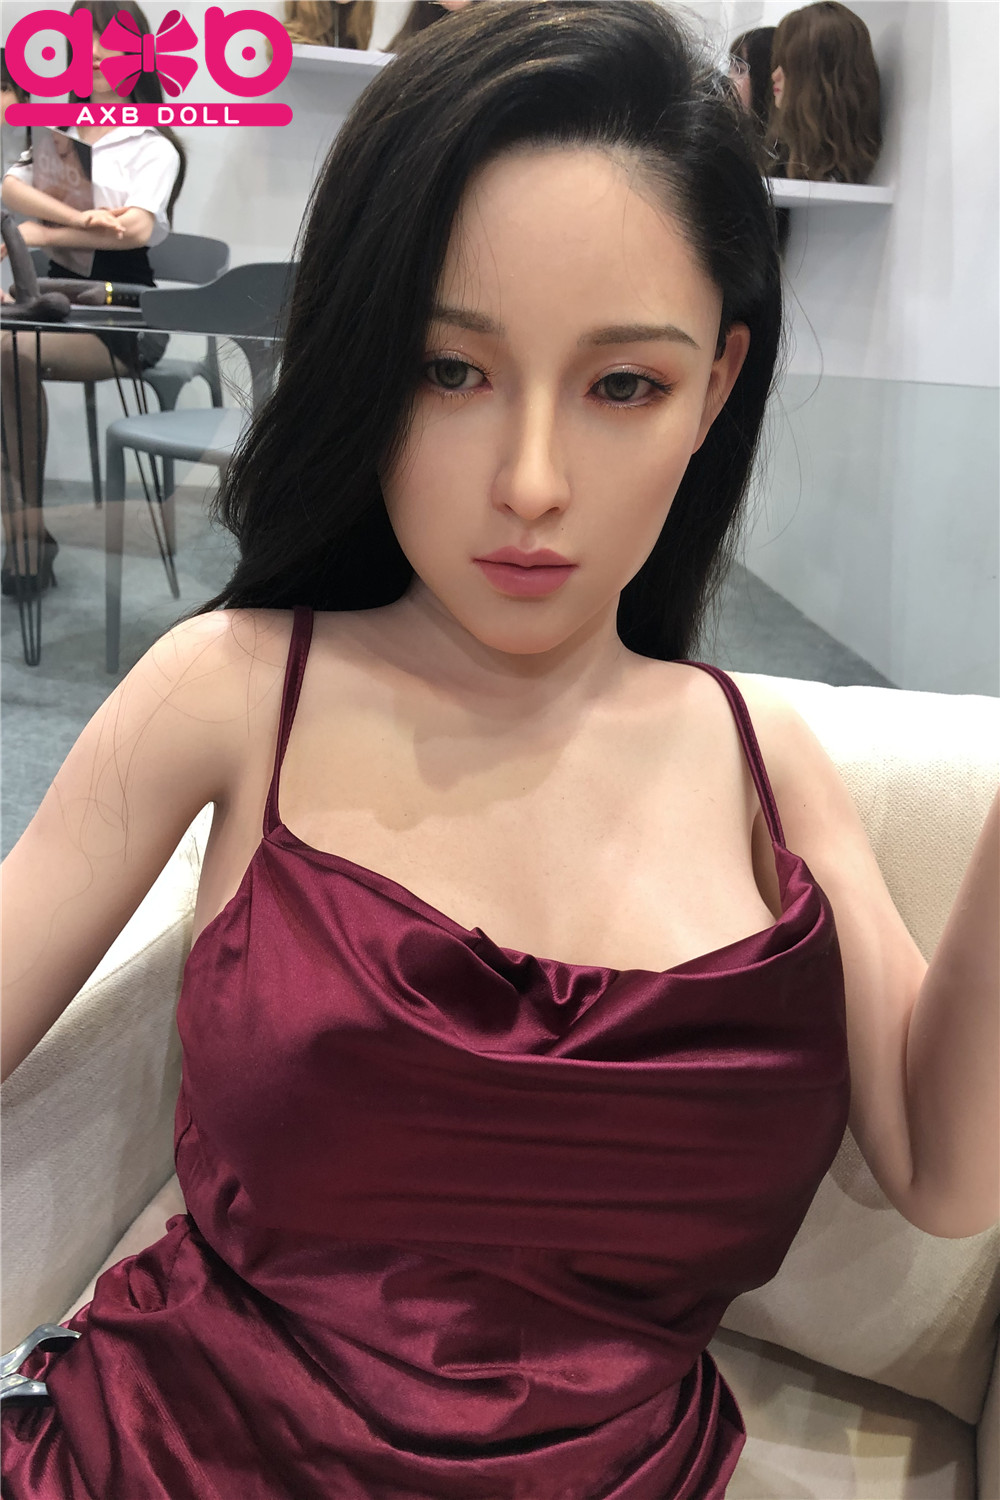 AXBDOLL 165cm G07# Full Silicone Realistic Sex Dolls For Men - 画像をクリックして閉じます